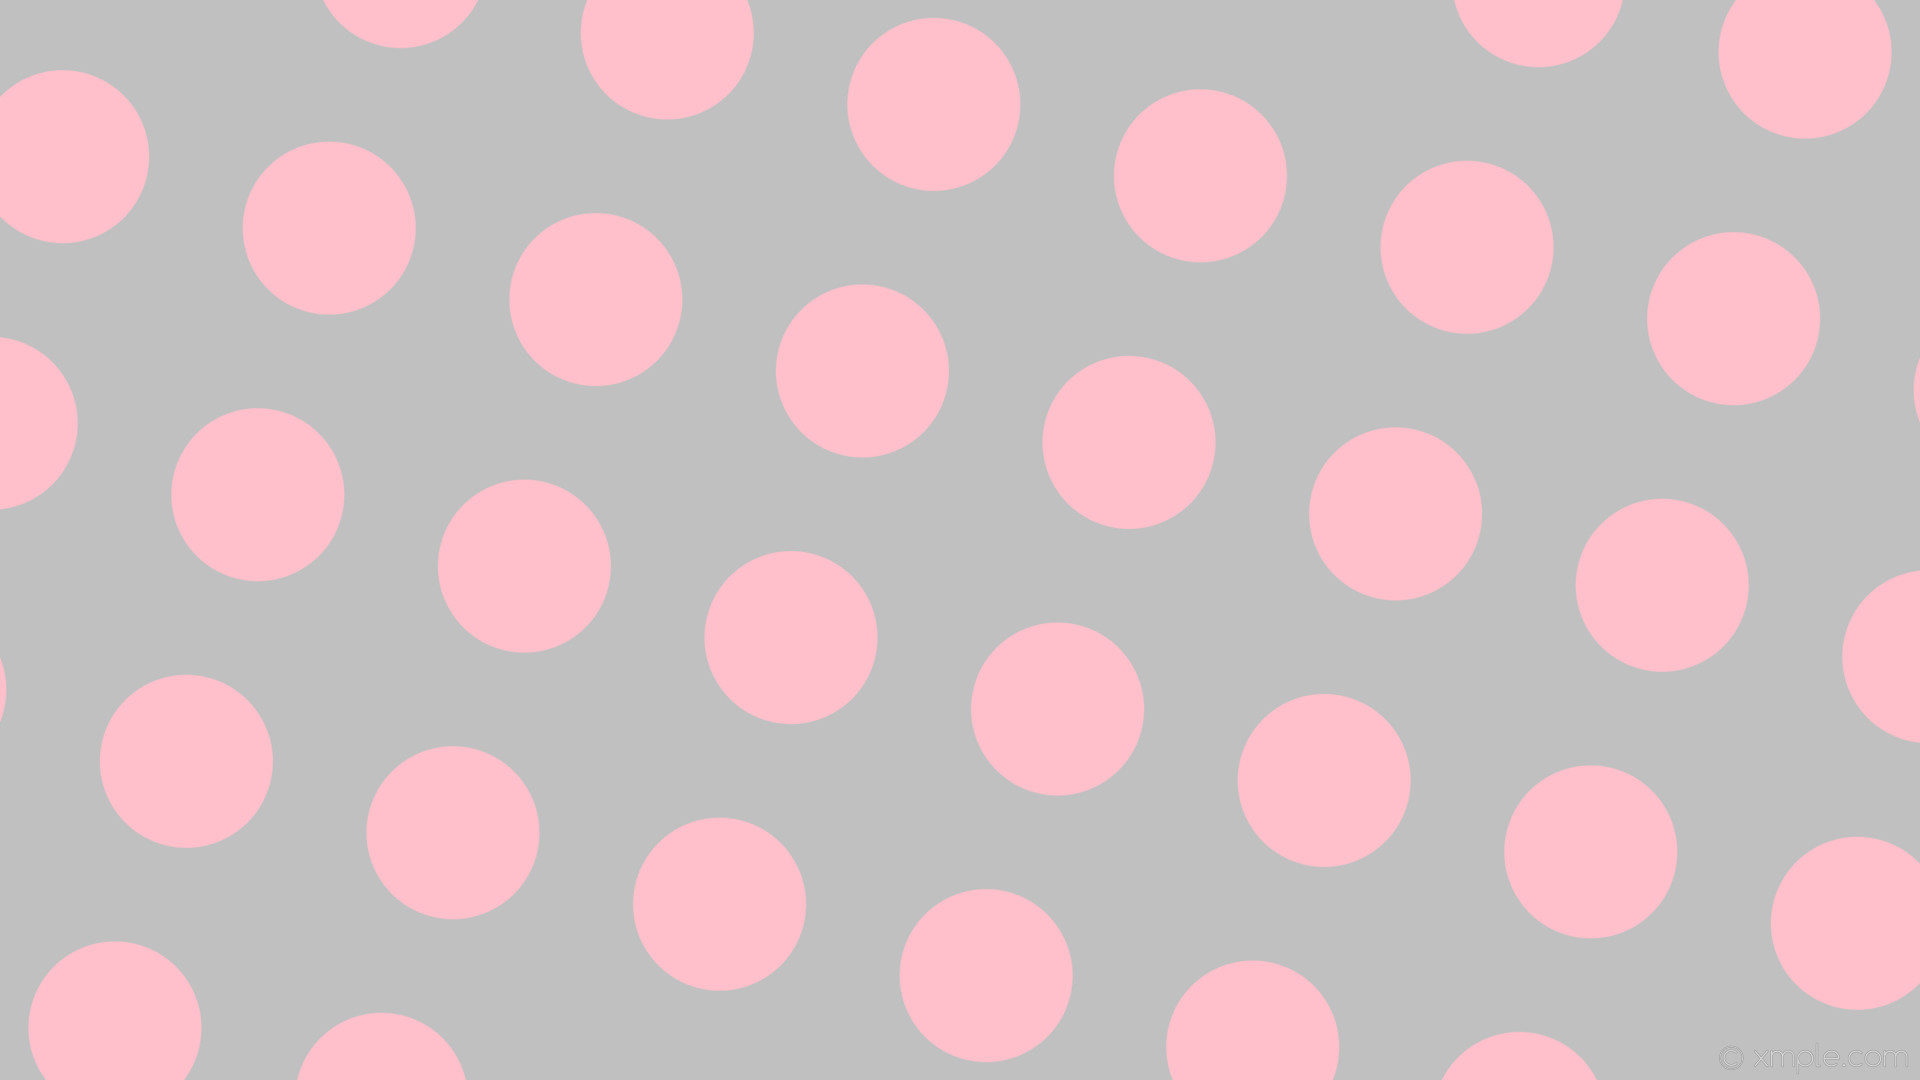 1920x1080 wallpaper polka dots spots grey pink silver #c0c0c0 #ffc0cb 165Â° 173px 276px